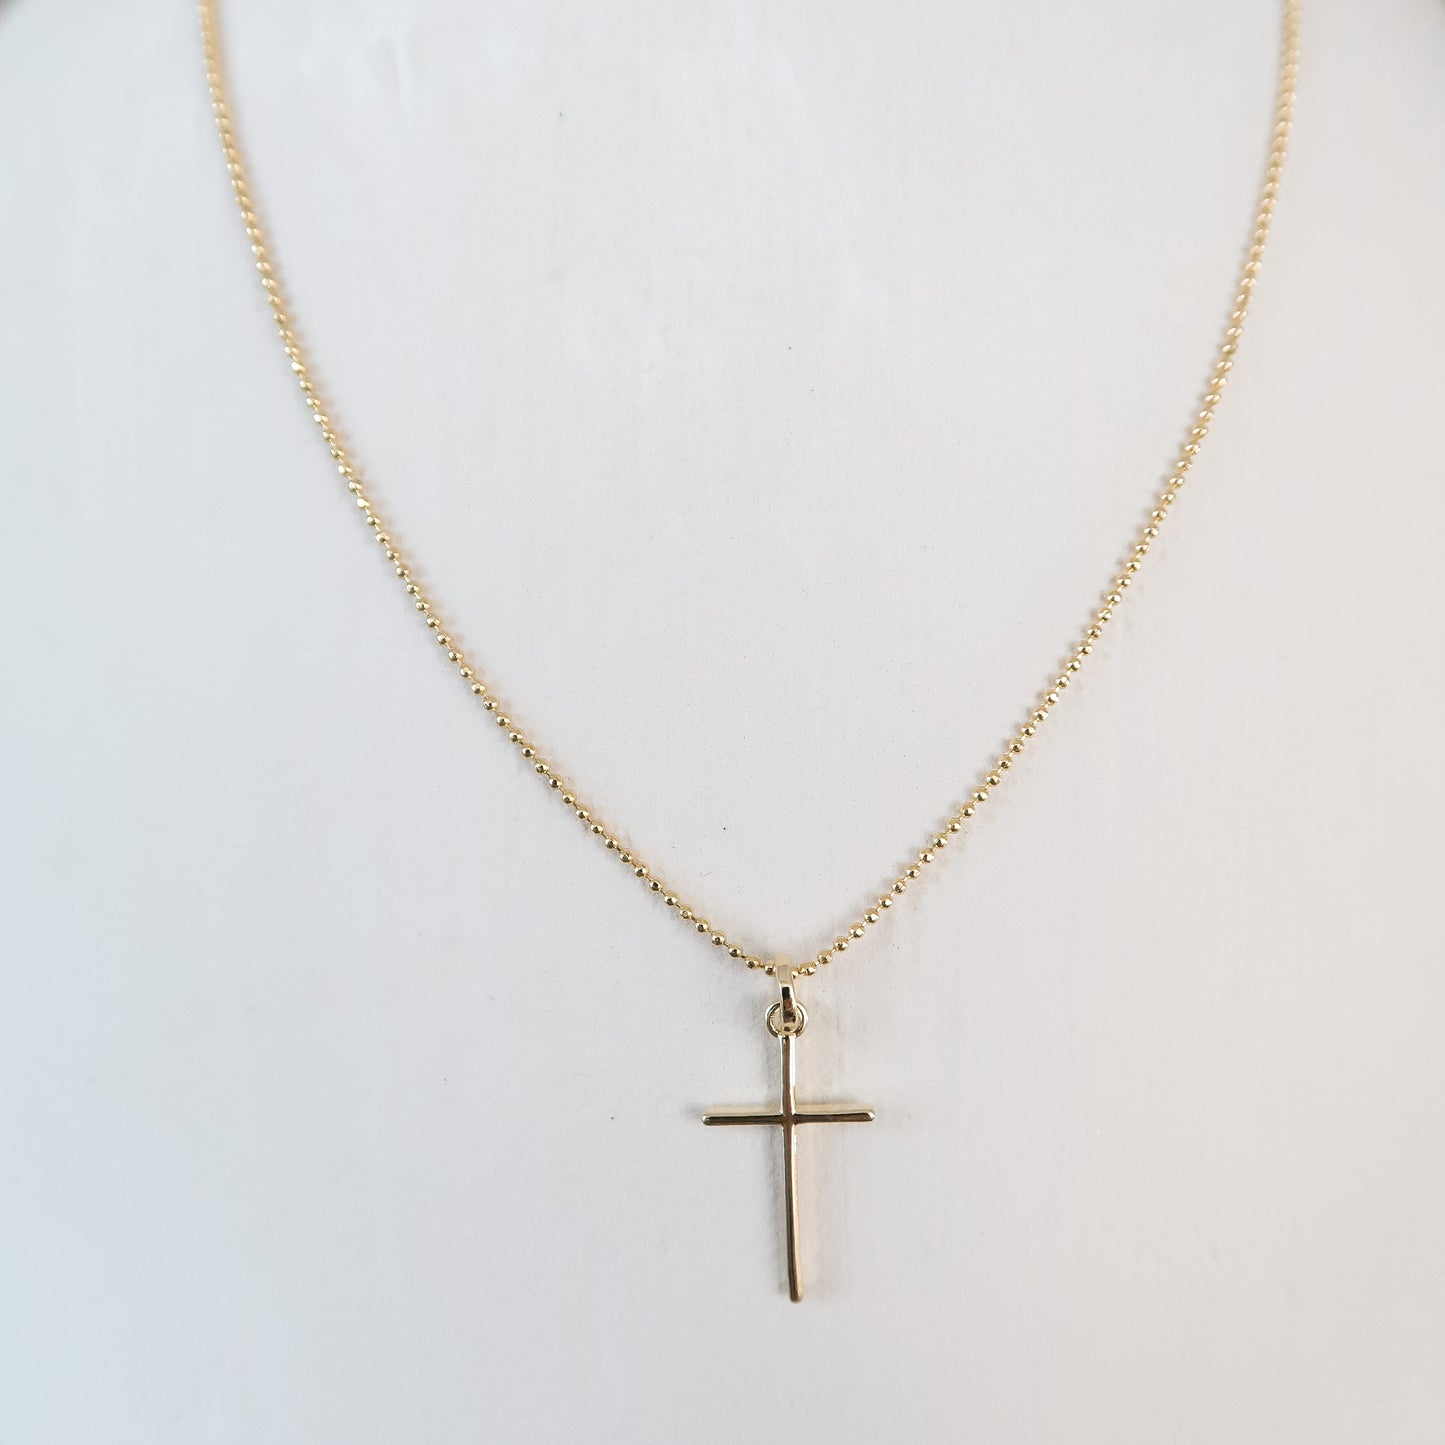 Gold_Aesthetic_Jewelry_Catholic_Cross_Crucifix_Medal_Faith_Bracelet_Necklace_Traditional_Shop_Pendant_Modern_Chain_Necklace_Women_Trendy_Mom_Devout_Faithful_0